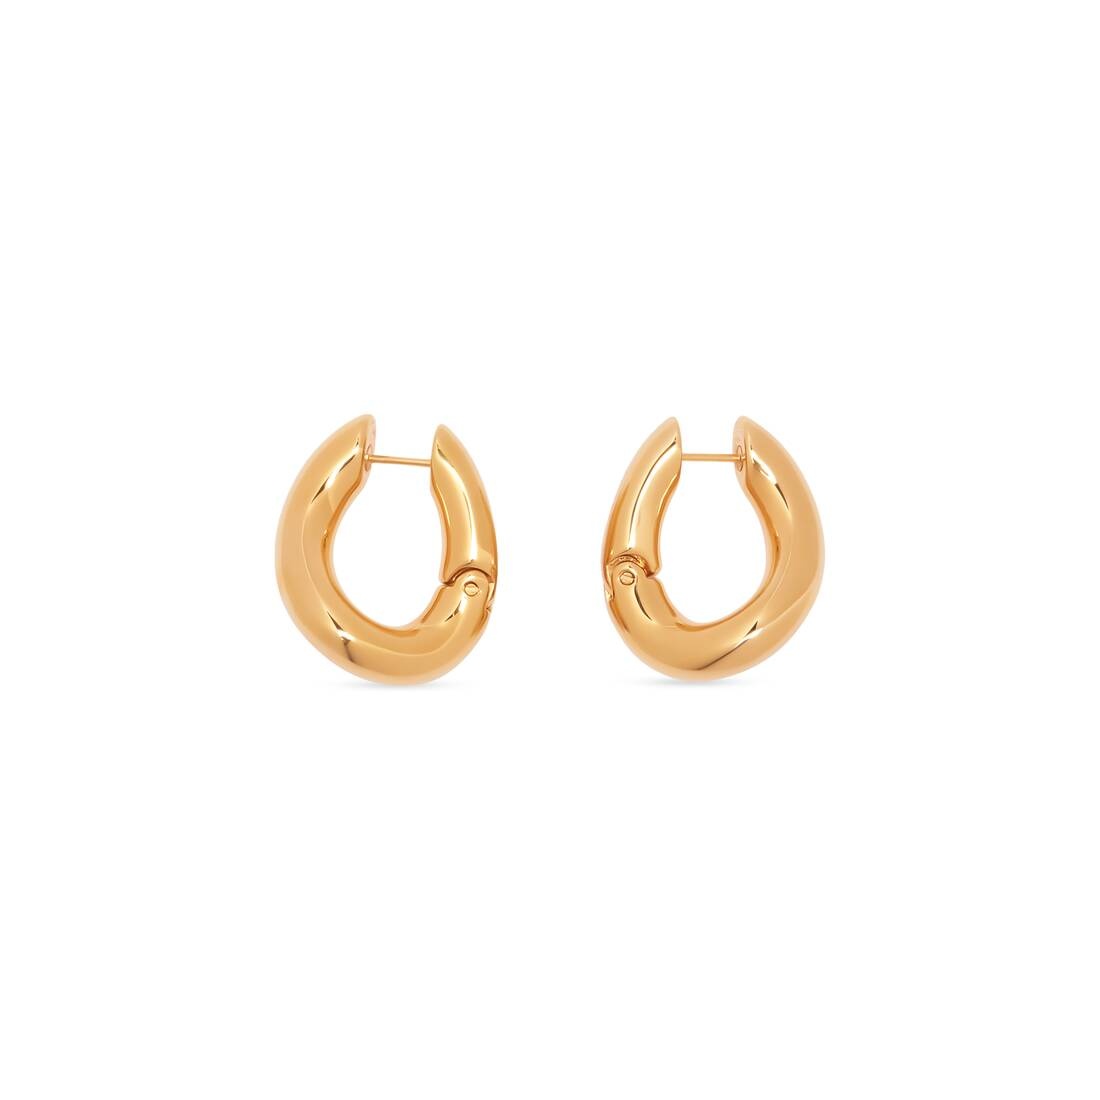 Women's Loop Earrings in Gold - 2